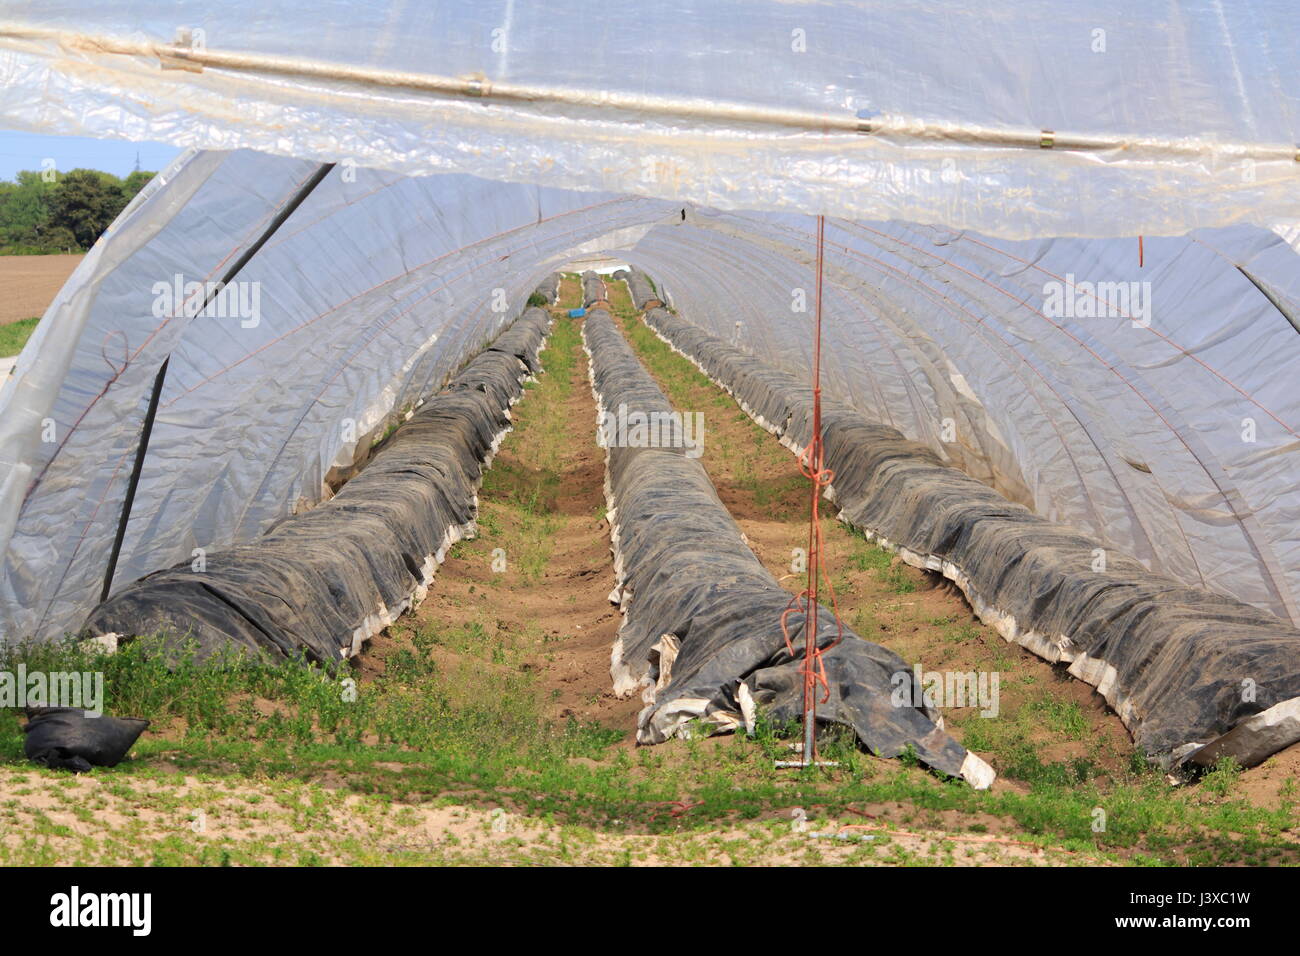 Spargel Anbau unter der Folie, im Zelt Foto Stock